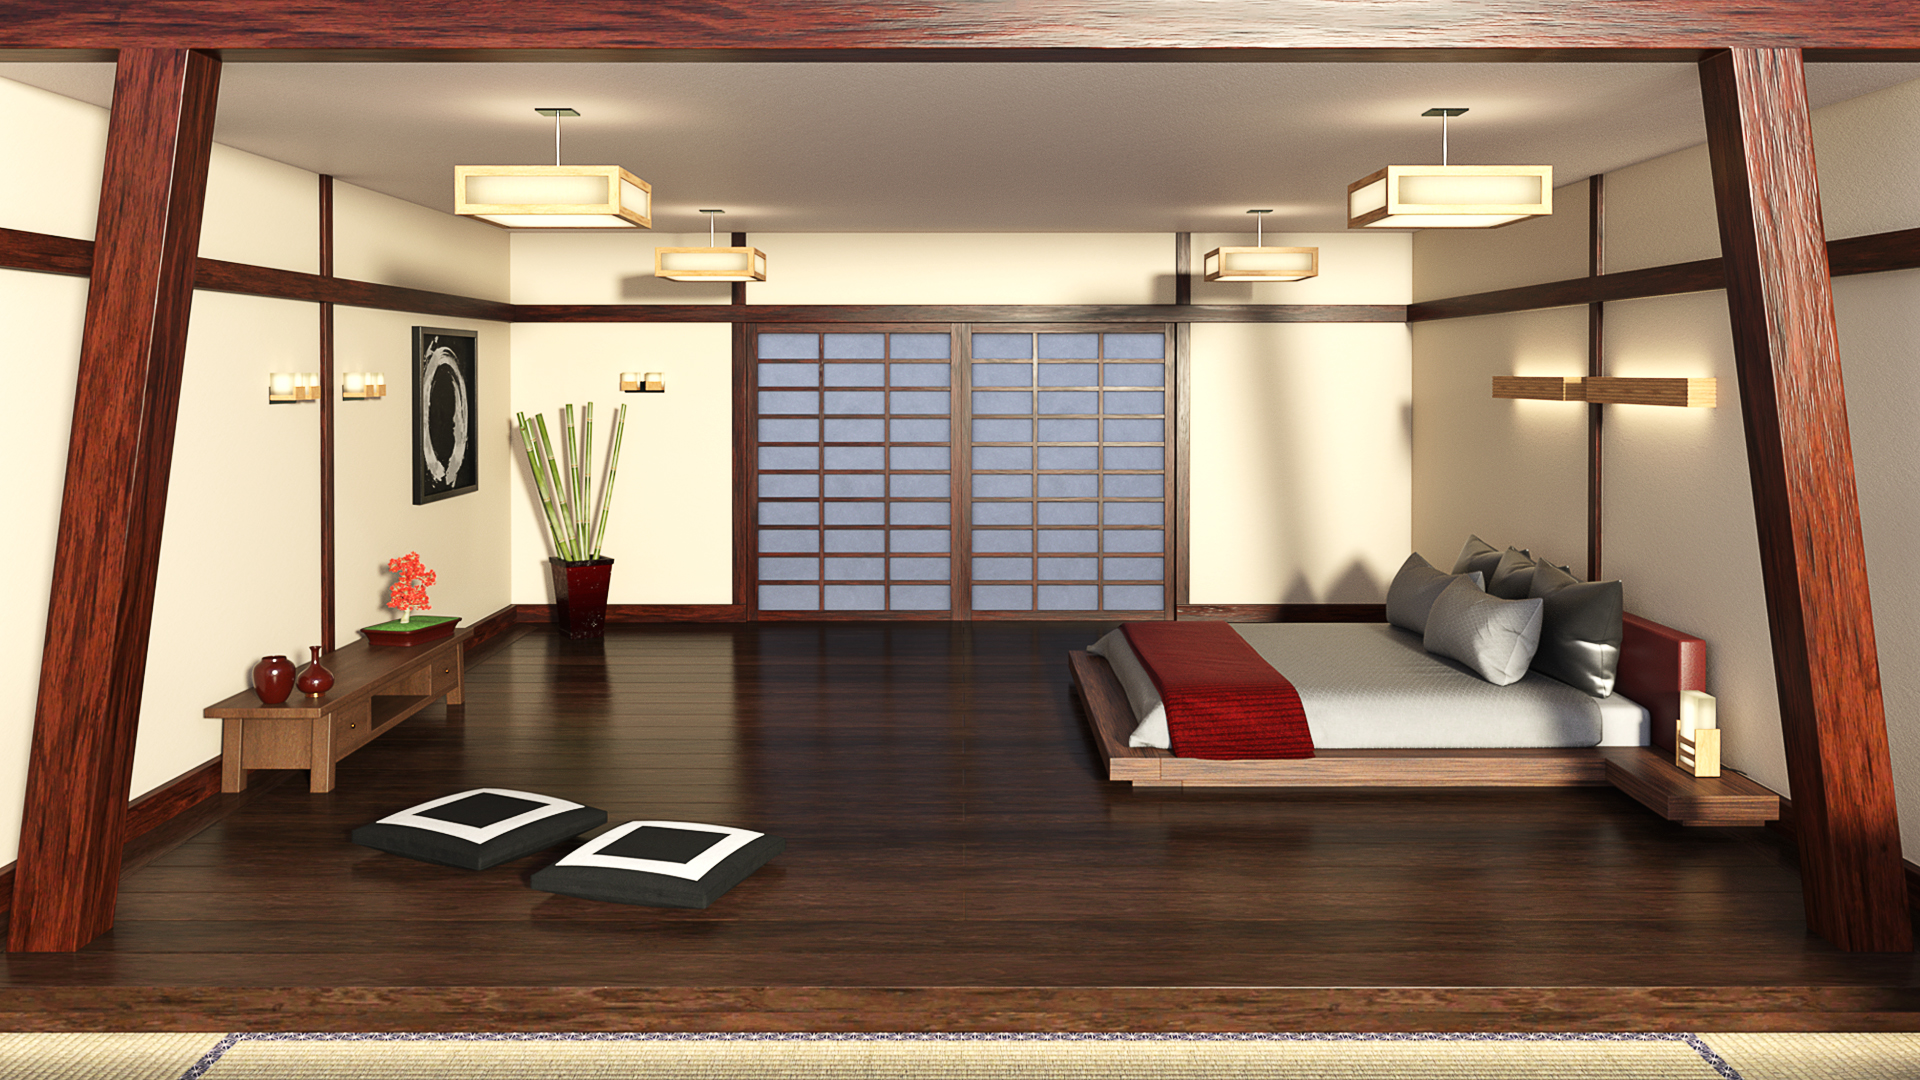 DD Japanese Bedroom by: Digital Delirium, 3D Models by Daz 3D